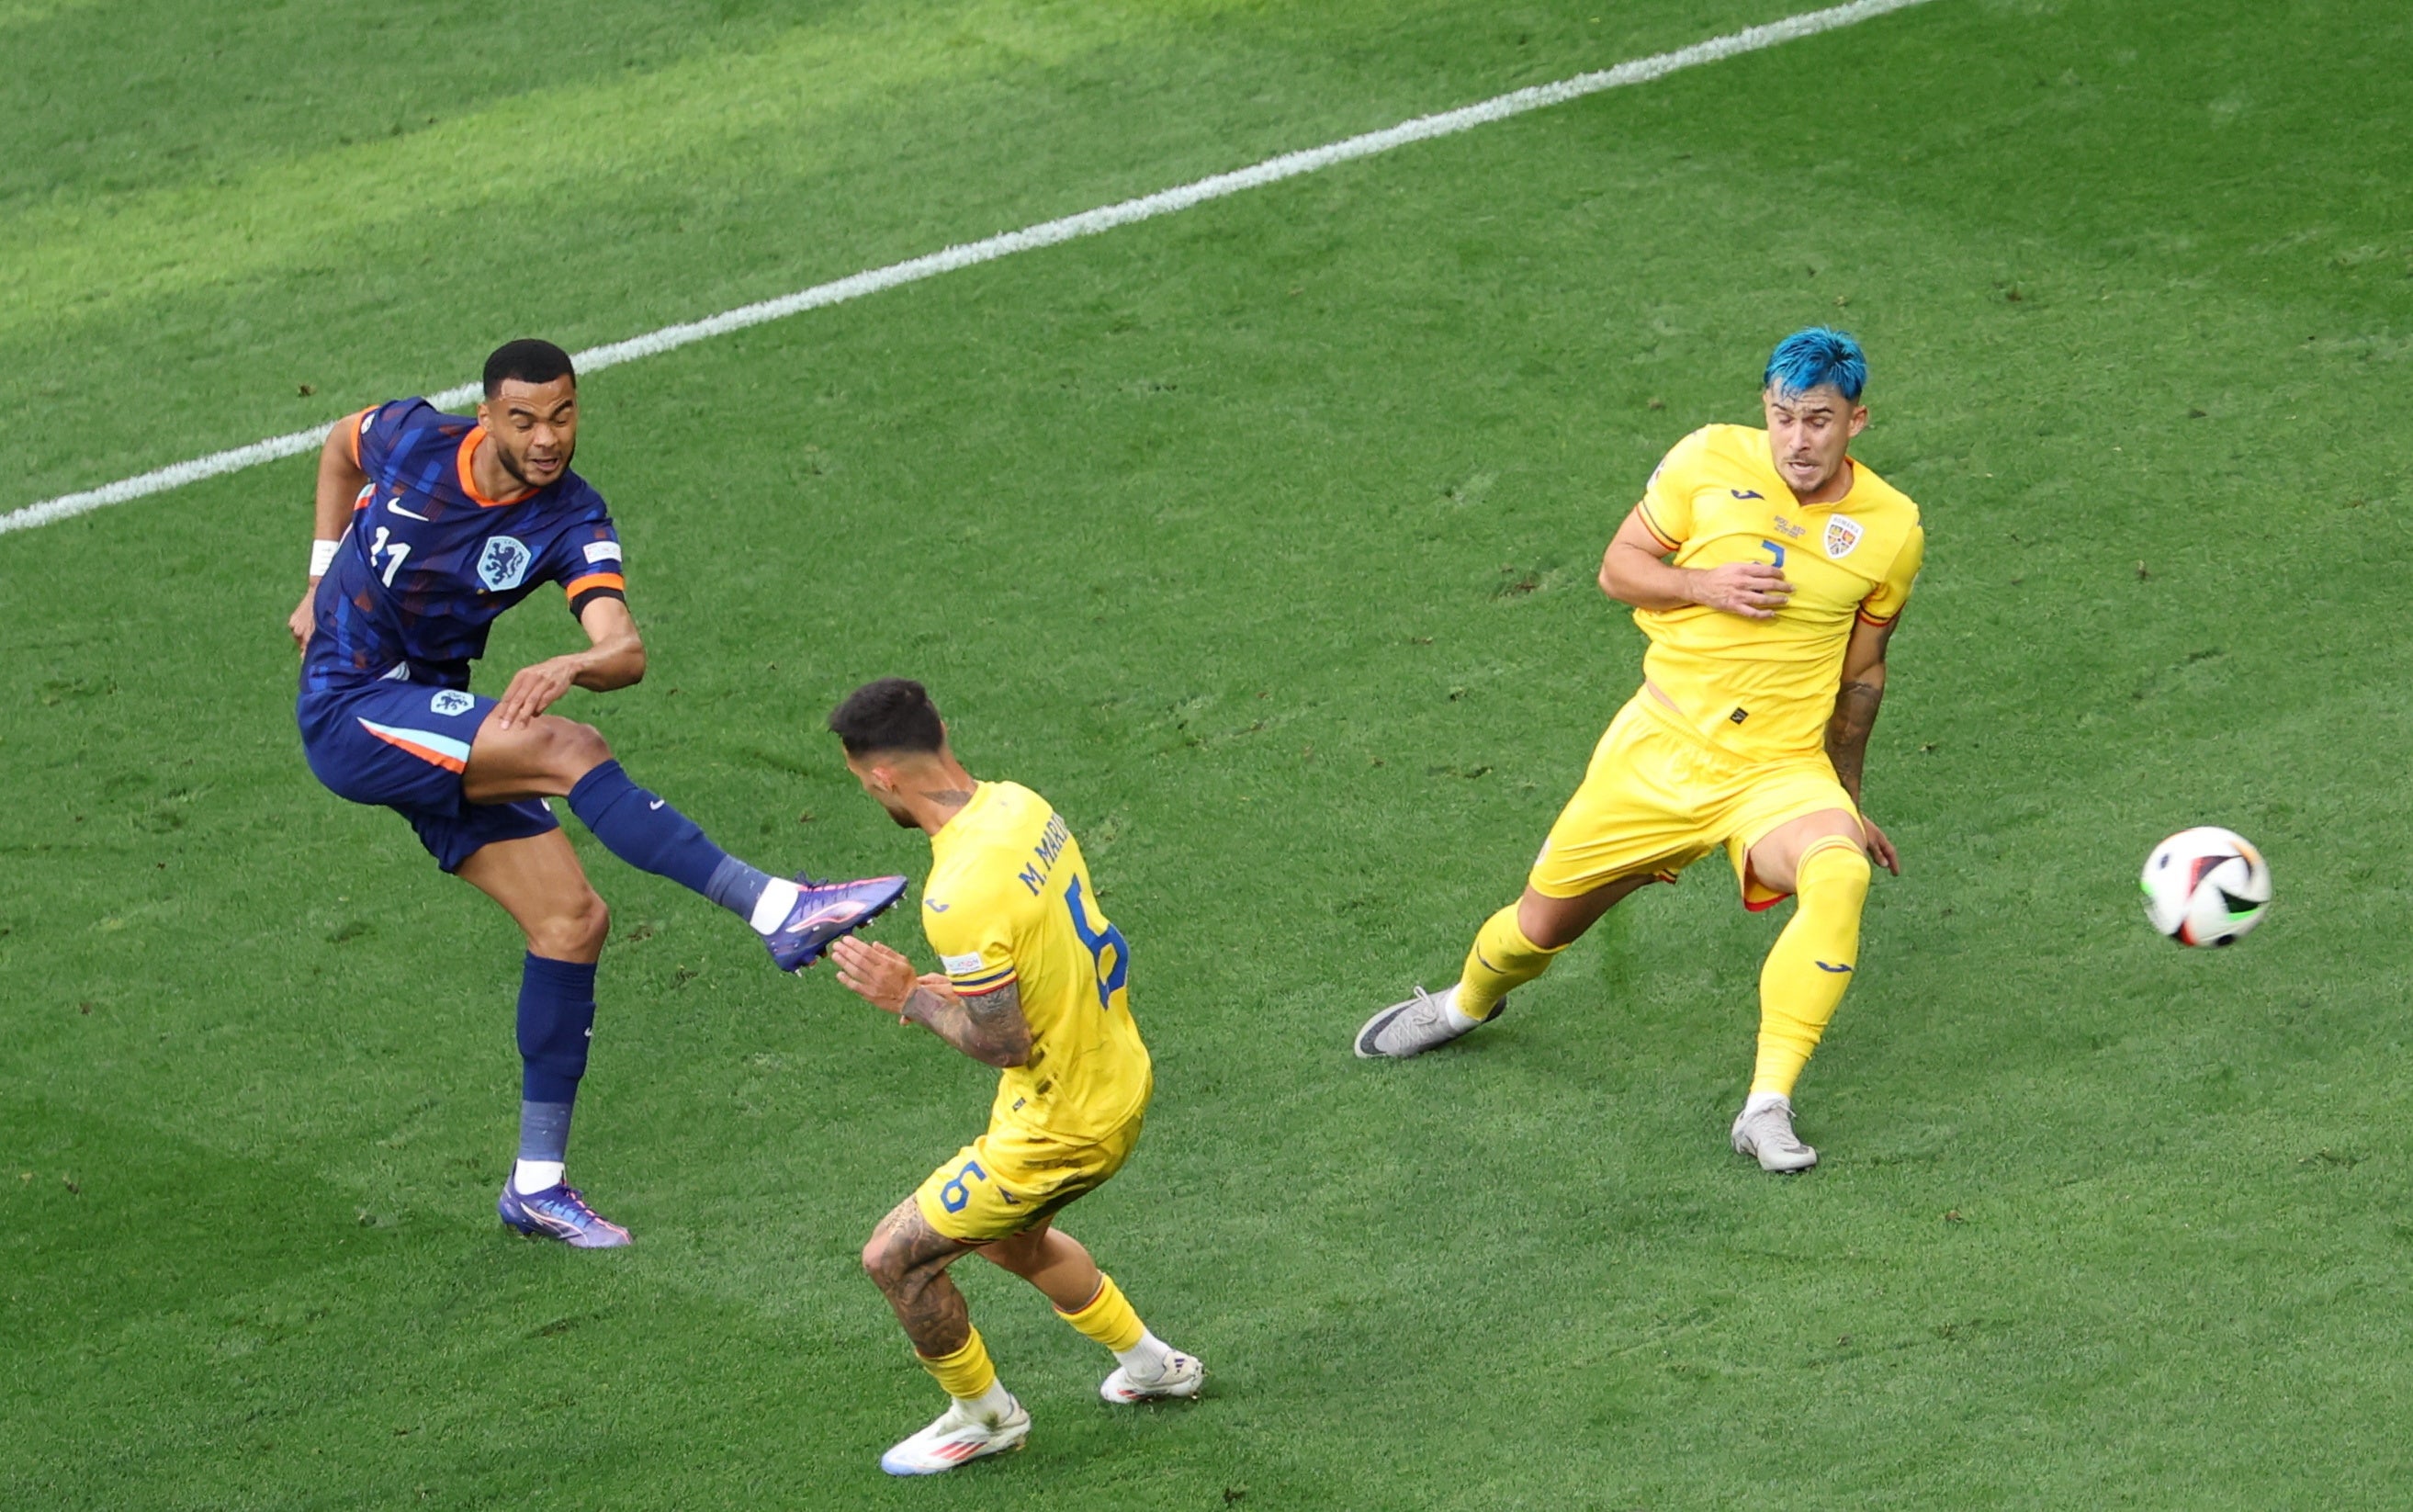 Romania vs Netherlands - Figure 4